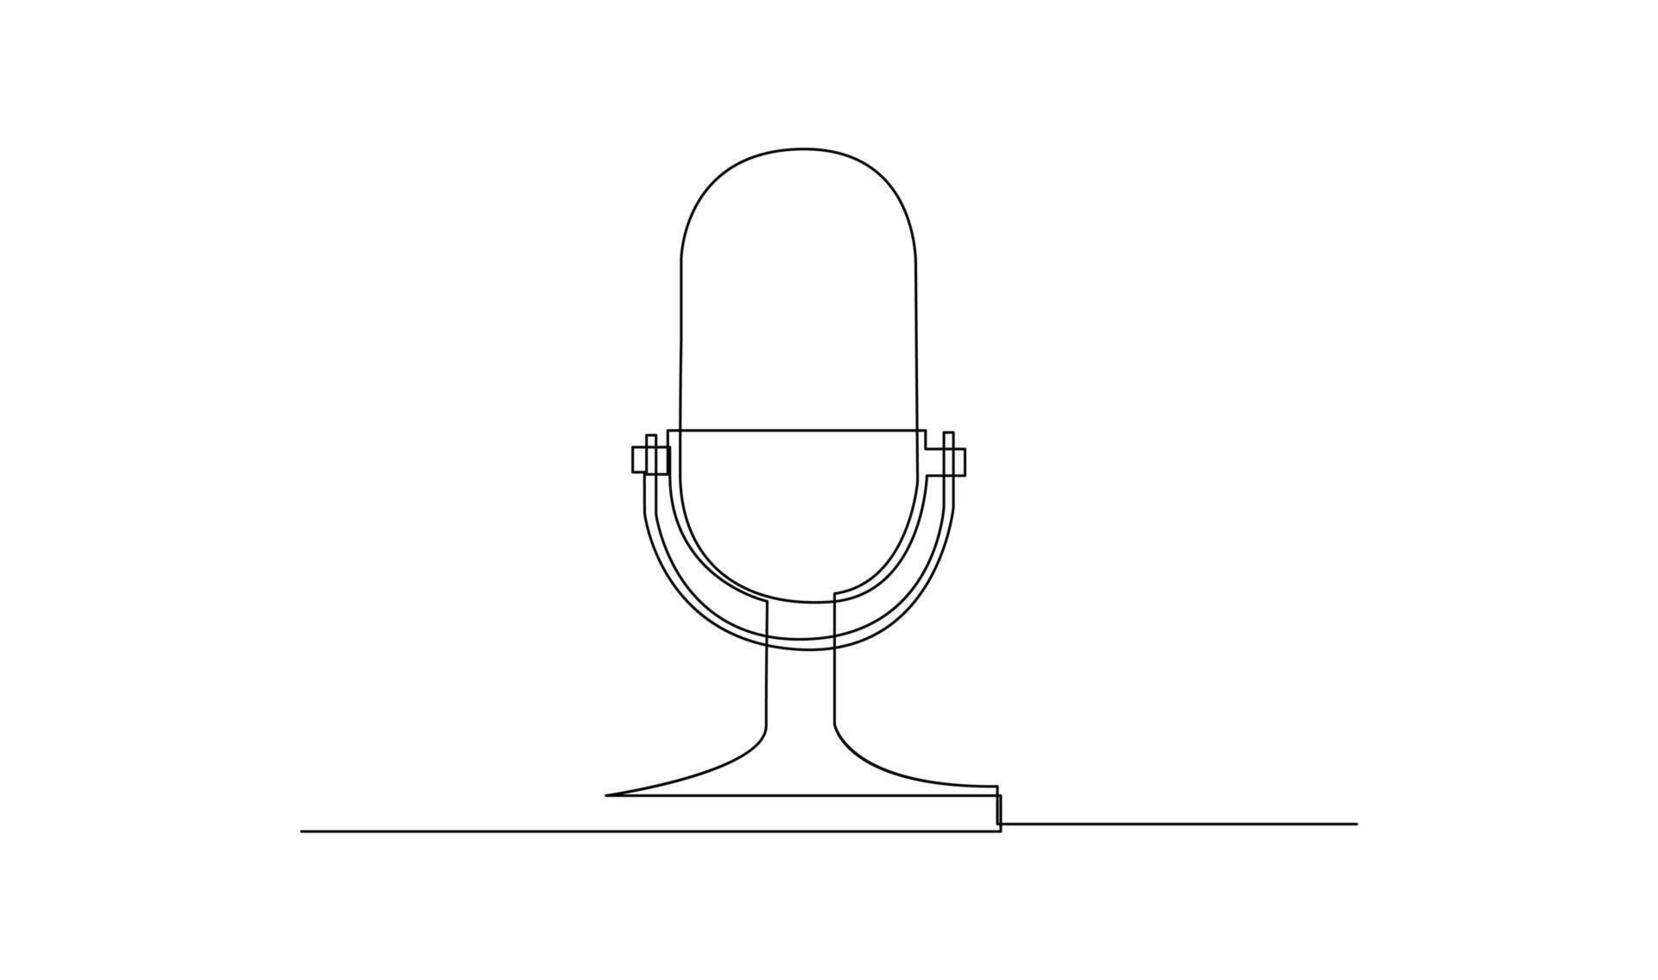 continu ligne dessin de vecteur câblé microphone icône